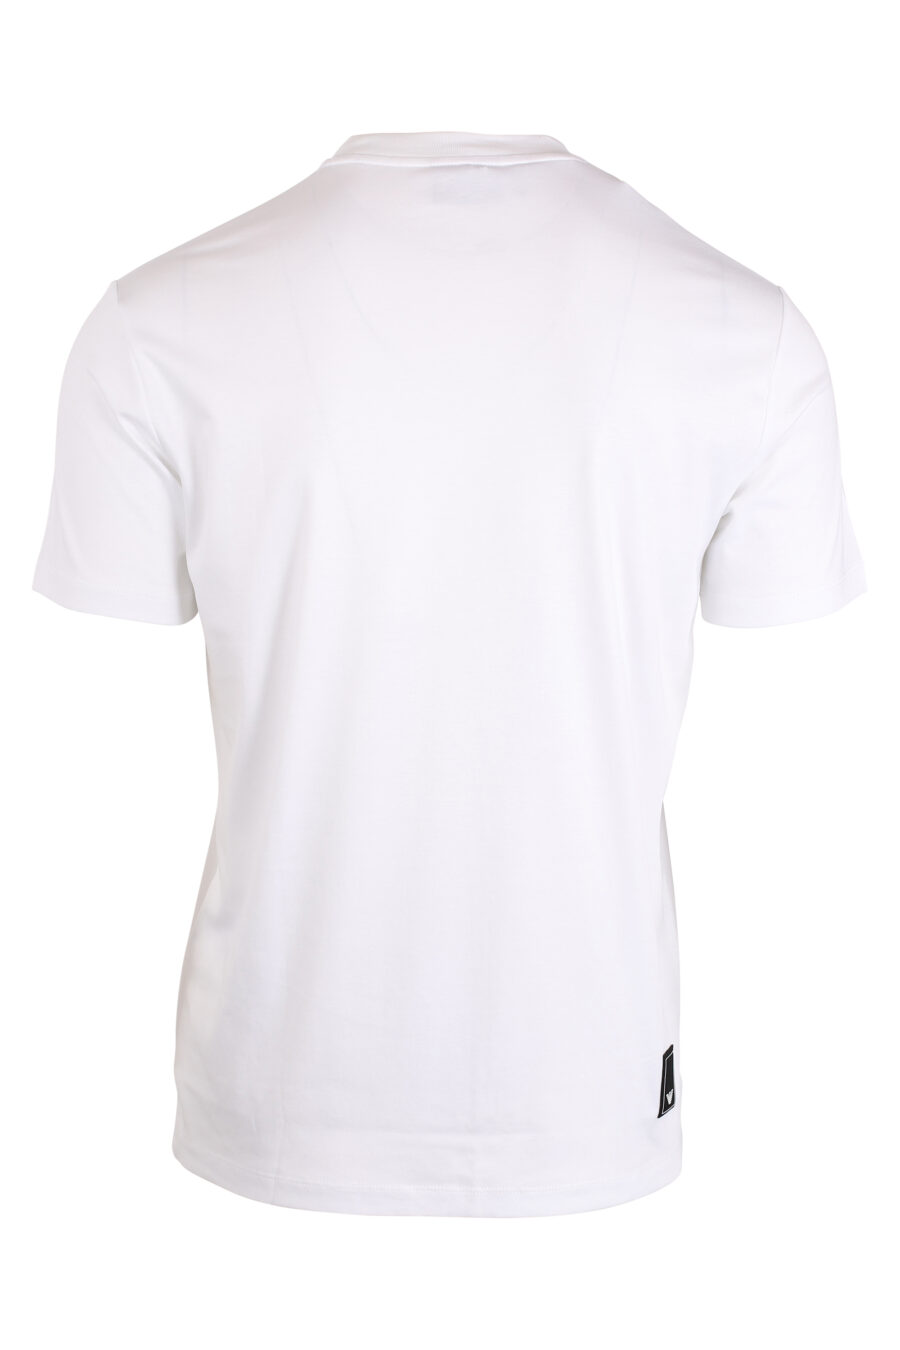 T-shirt blanc avec minilogue blanc - IMG 4268